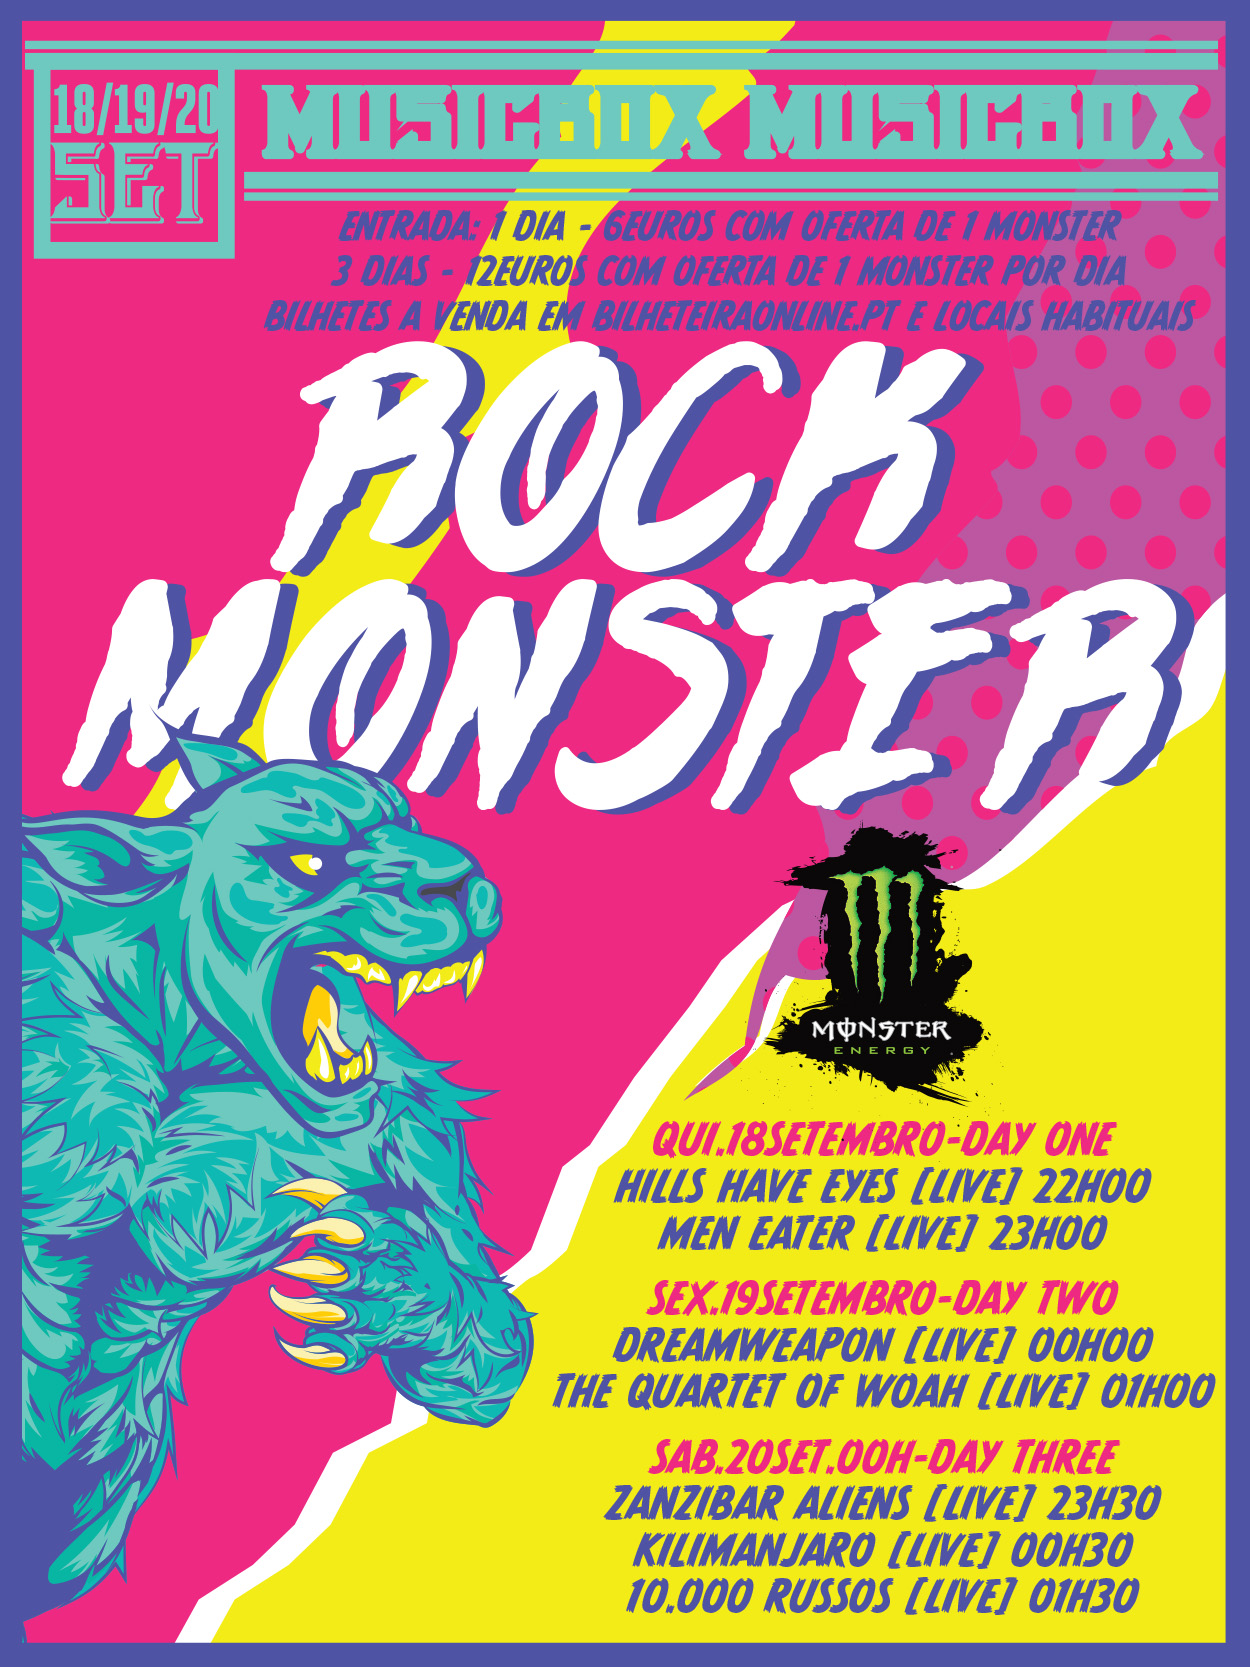 musicbox - rock monster_banner_300_400